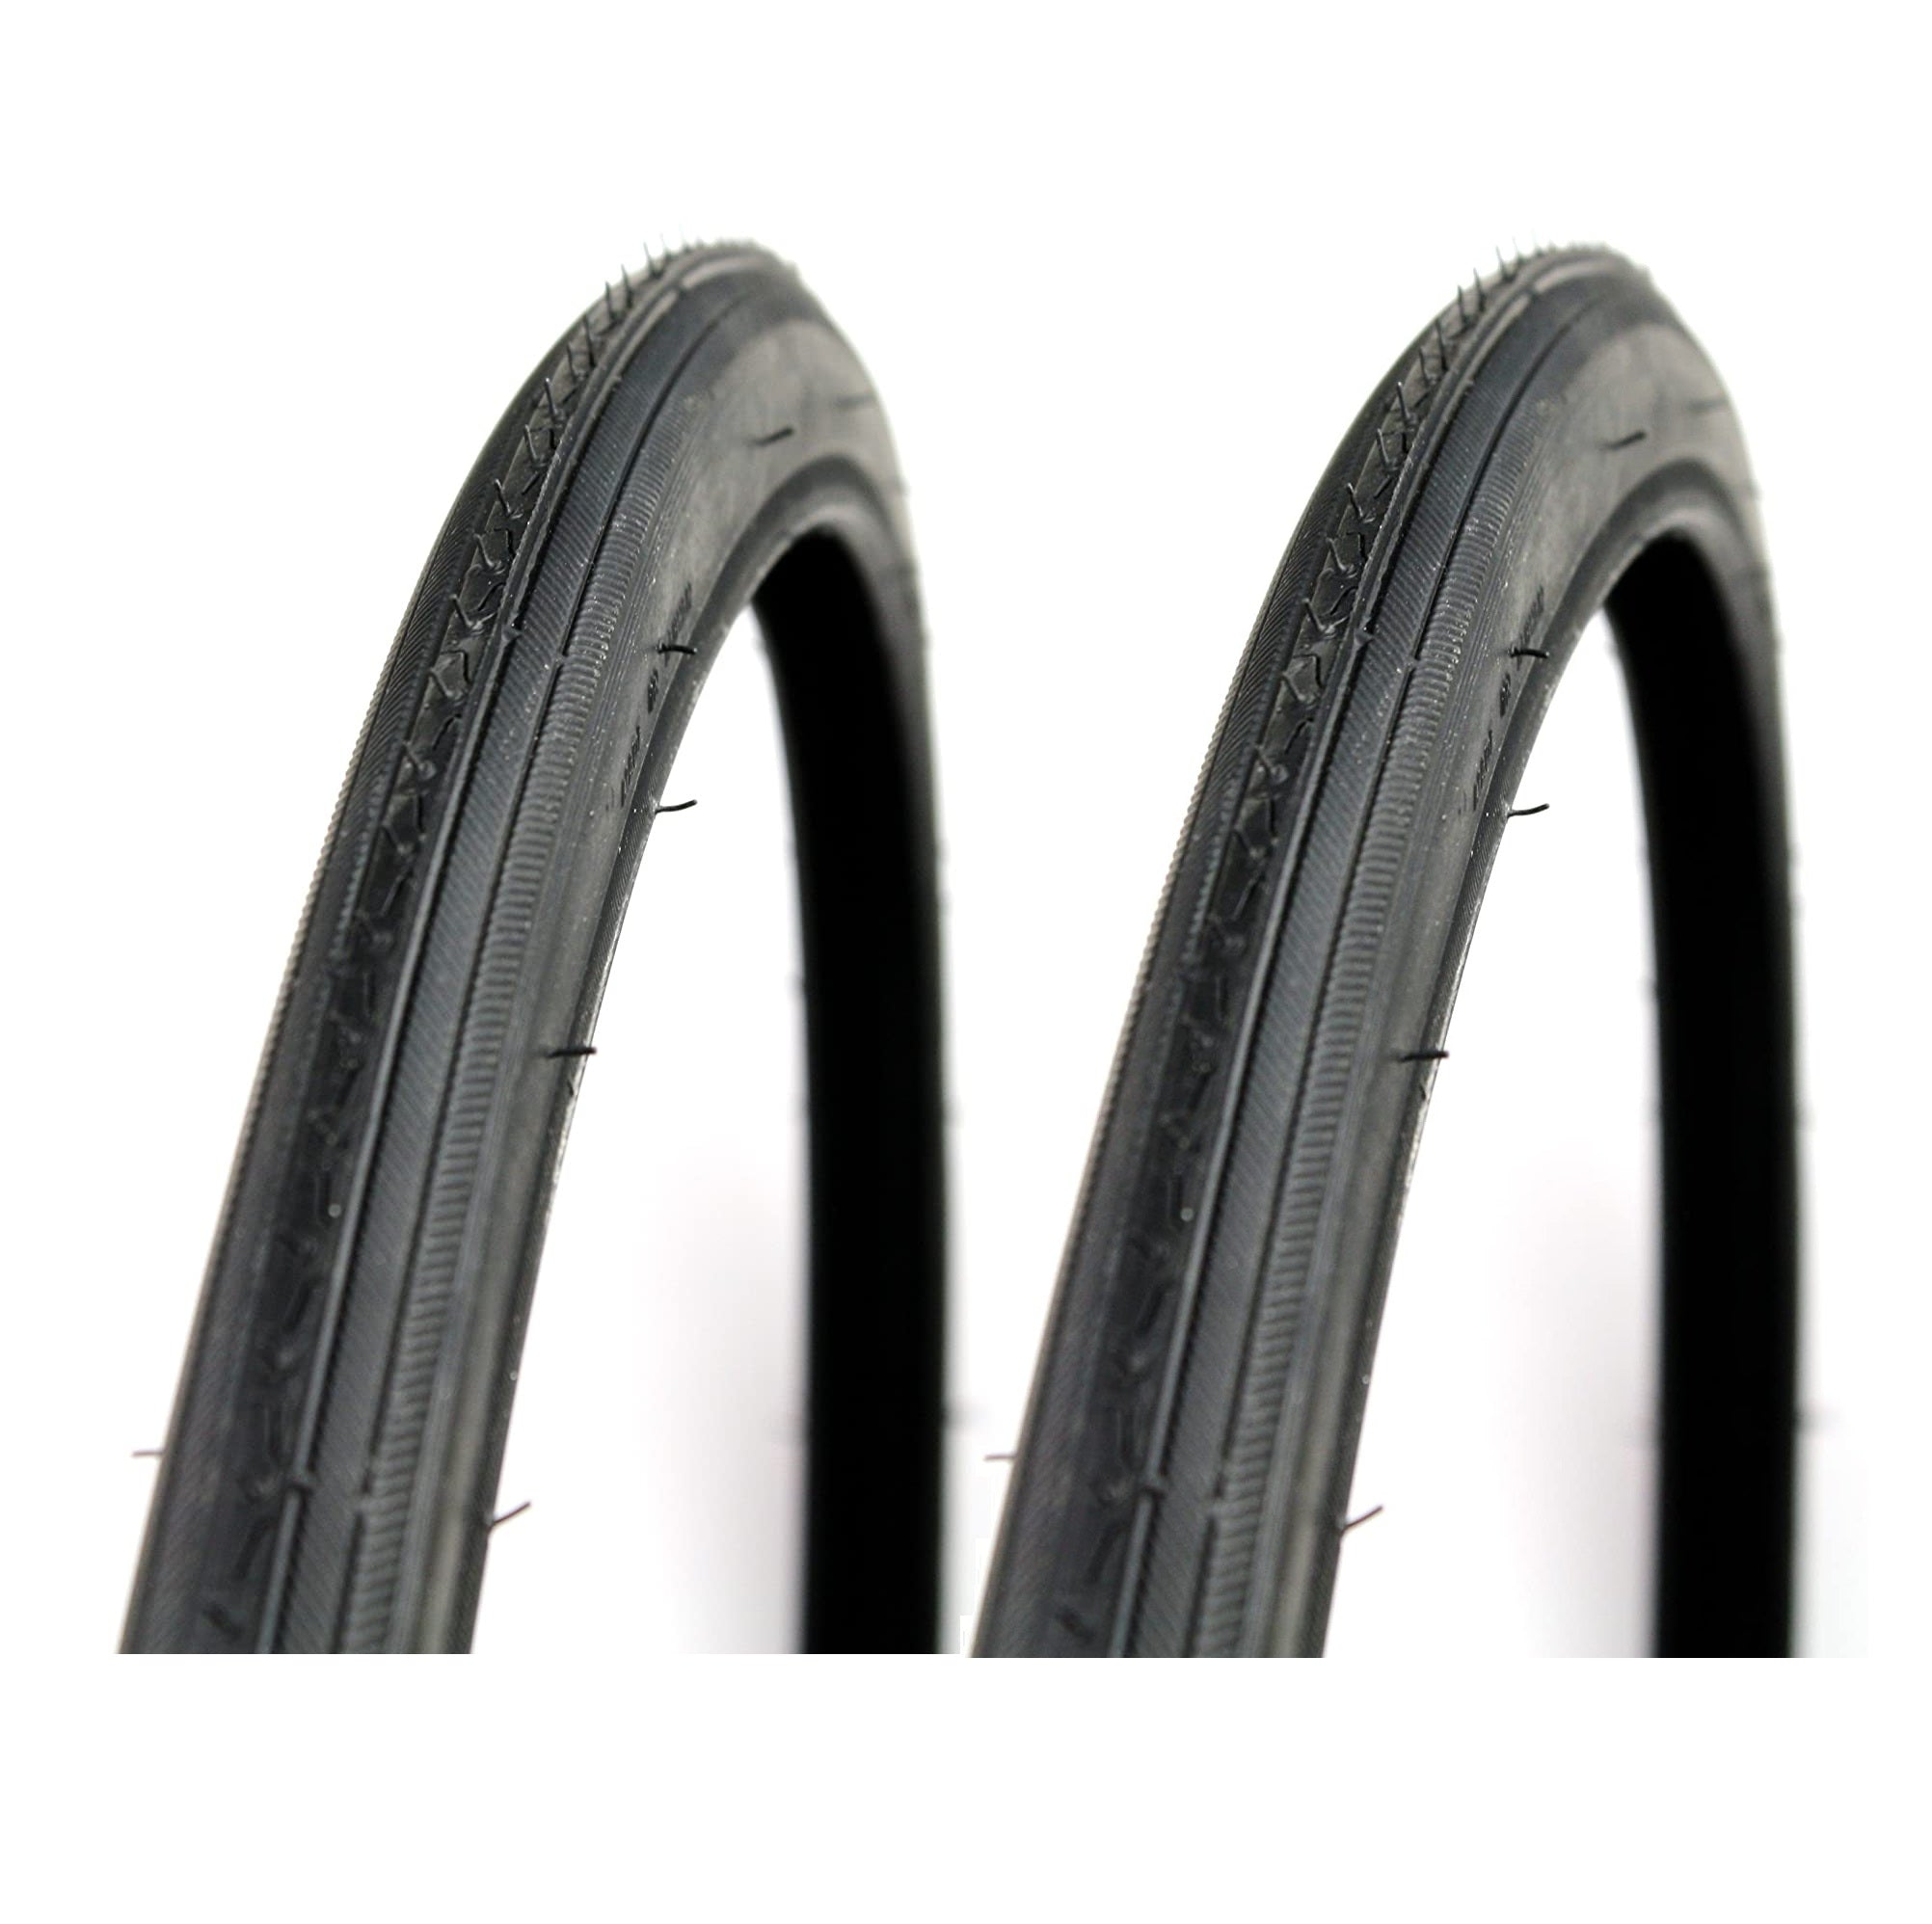 Two Kenda K35 blackwall tires